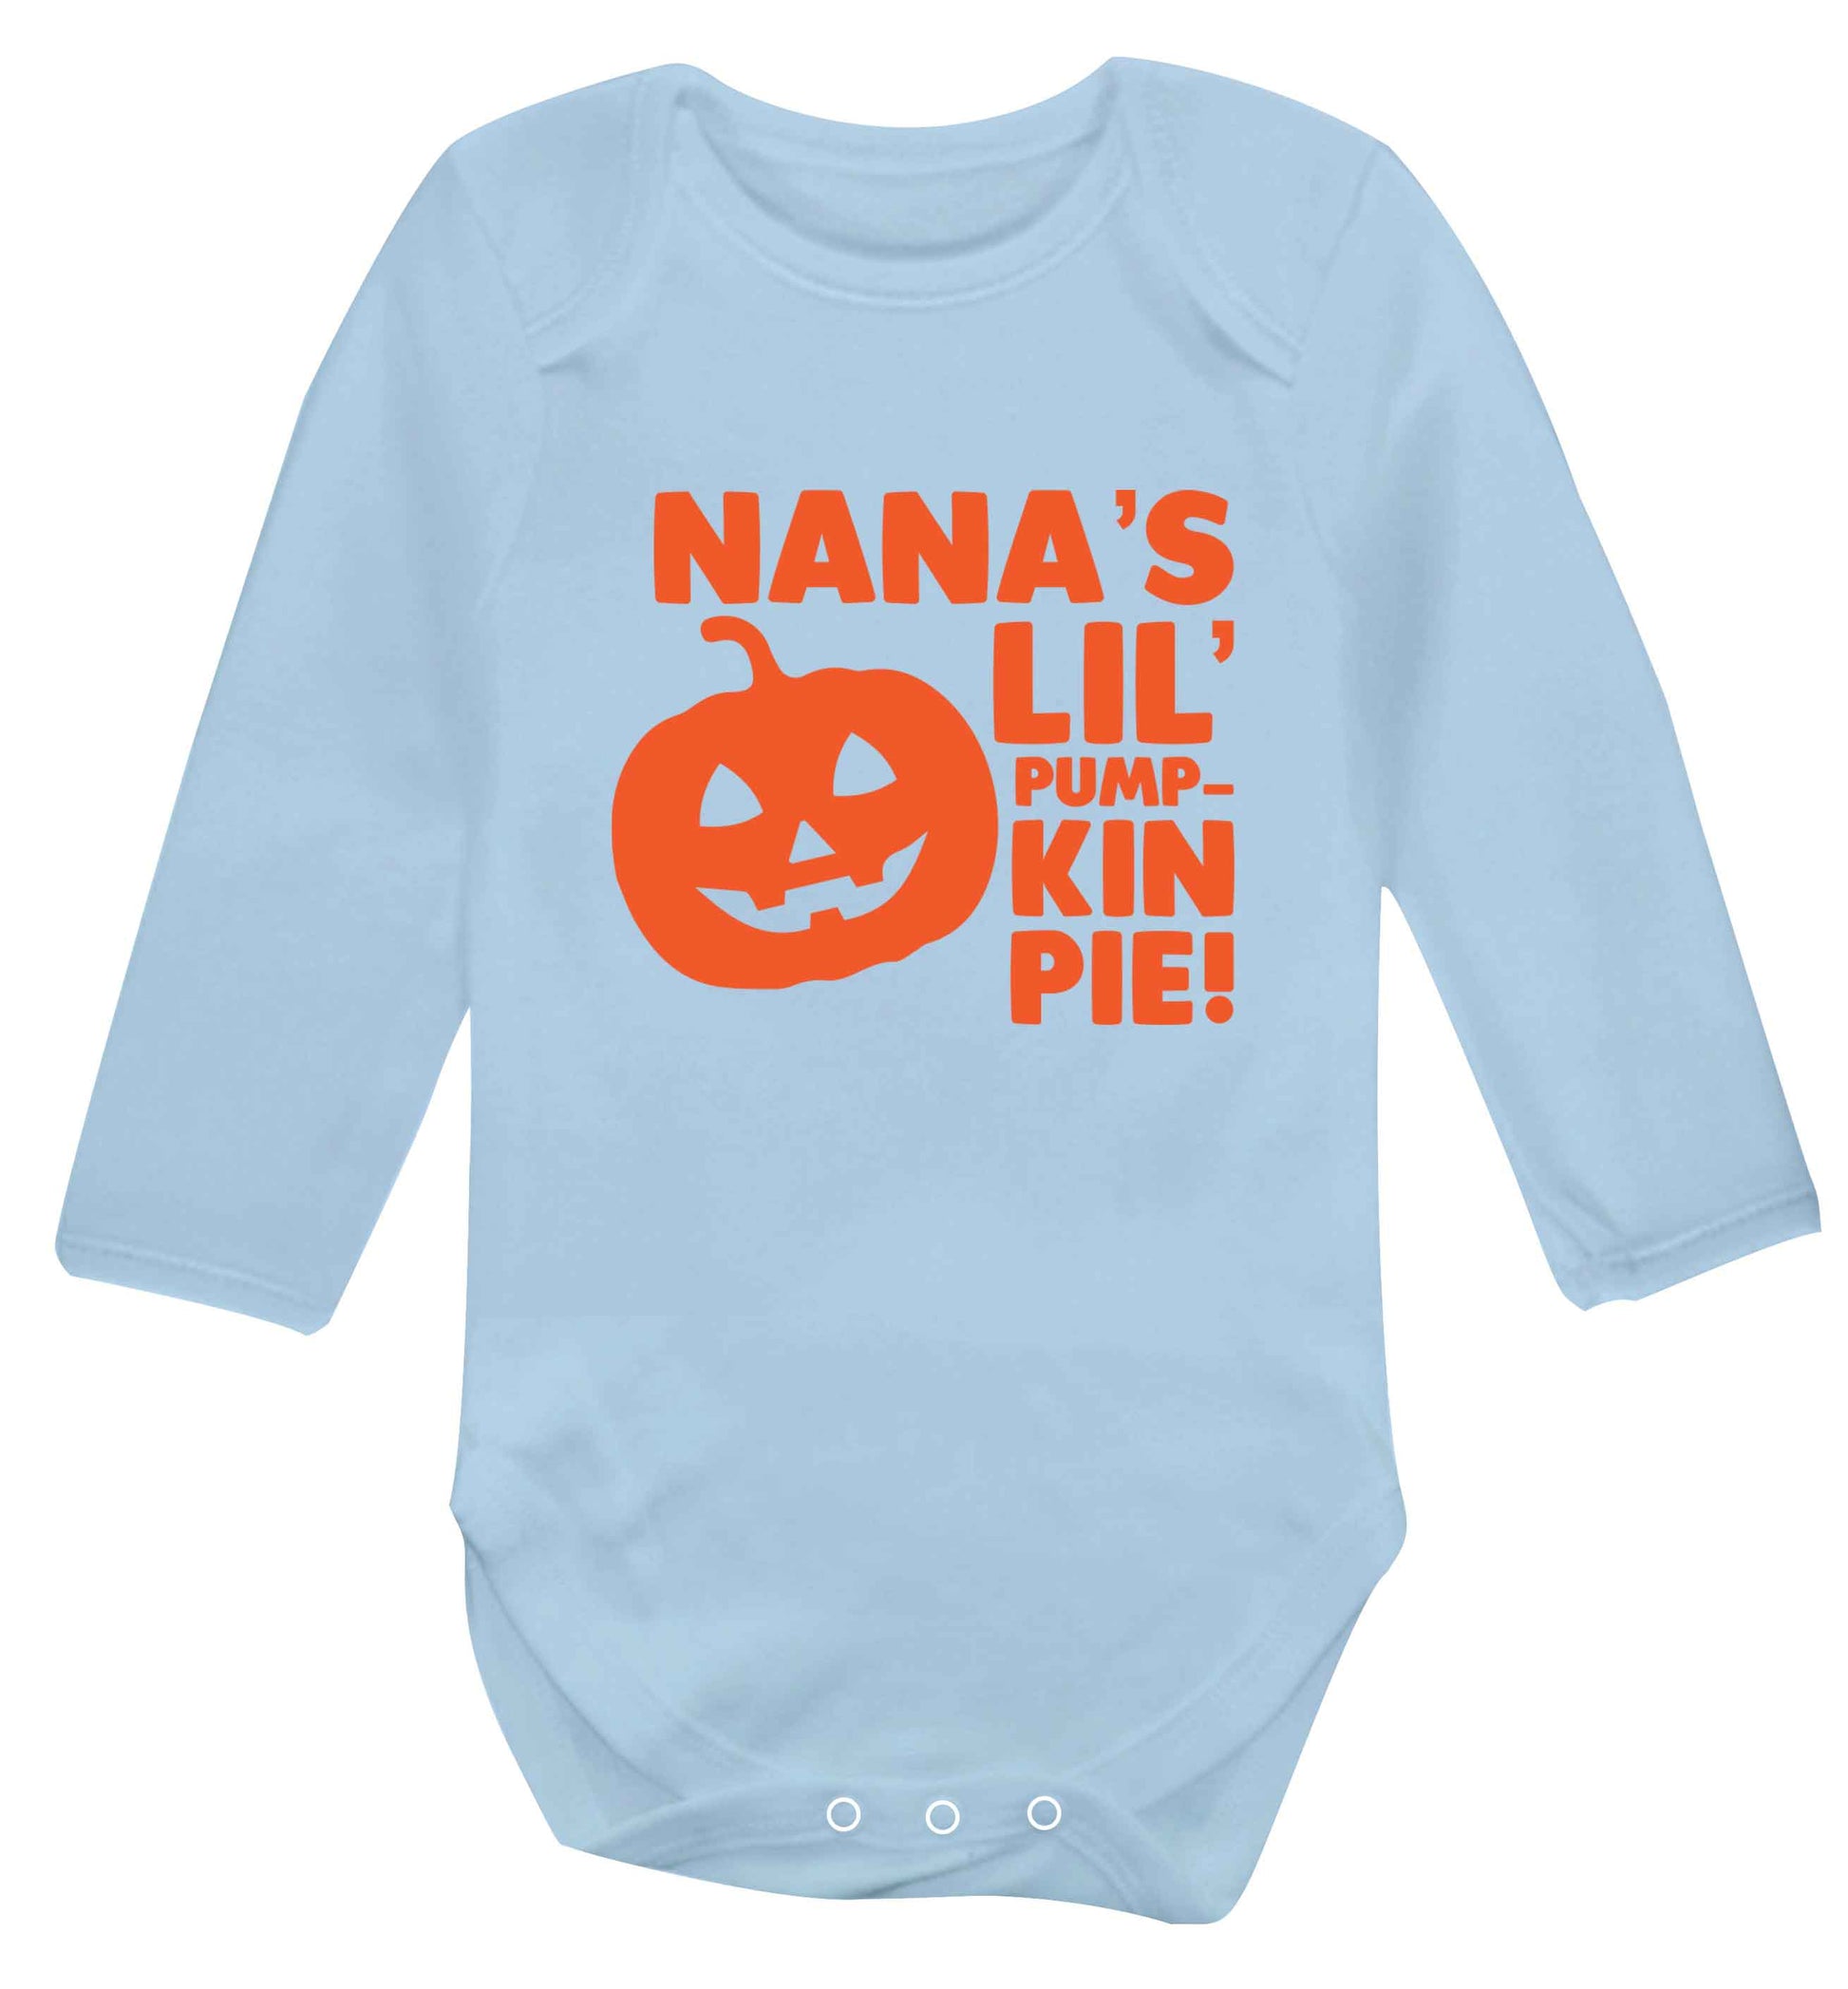 Nana's lil' pumpkin pie baby vest long sleeved pale blue 6-12 months